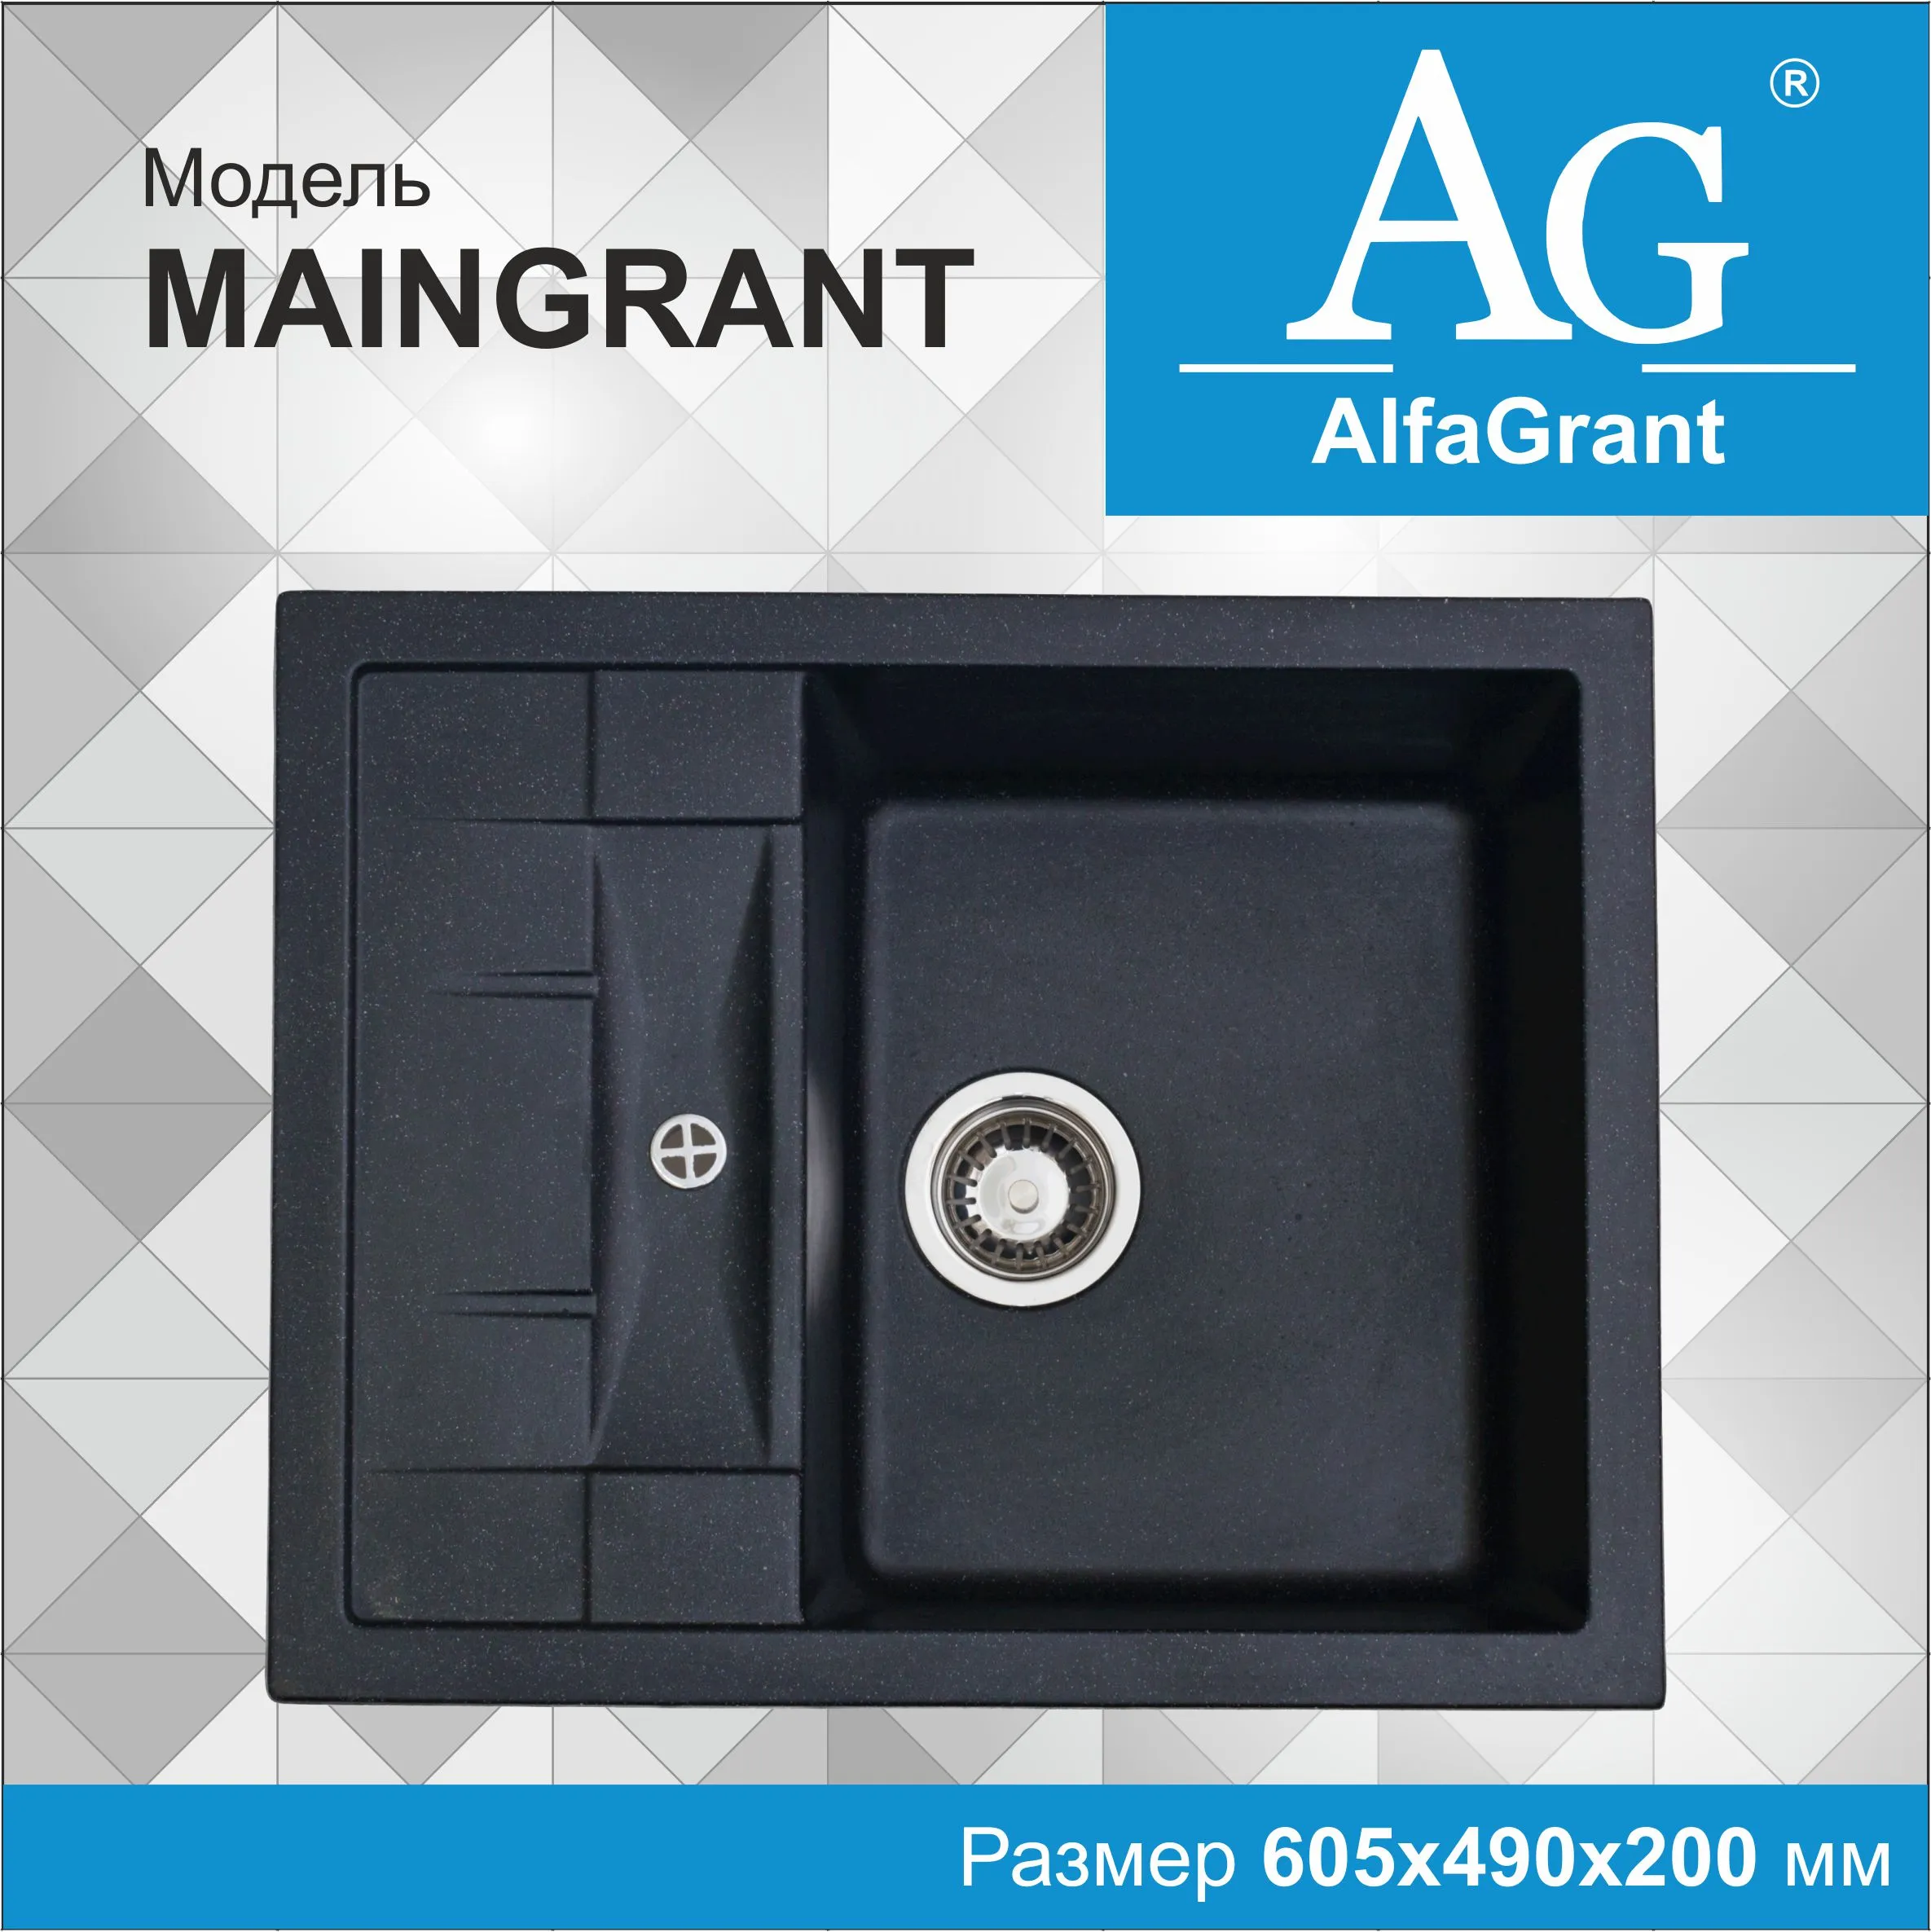 Кухонная мойка AlfaGrant модель MAINGRANT (AG-005).#1